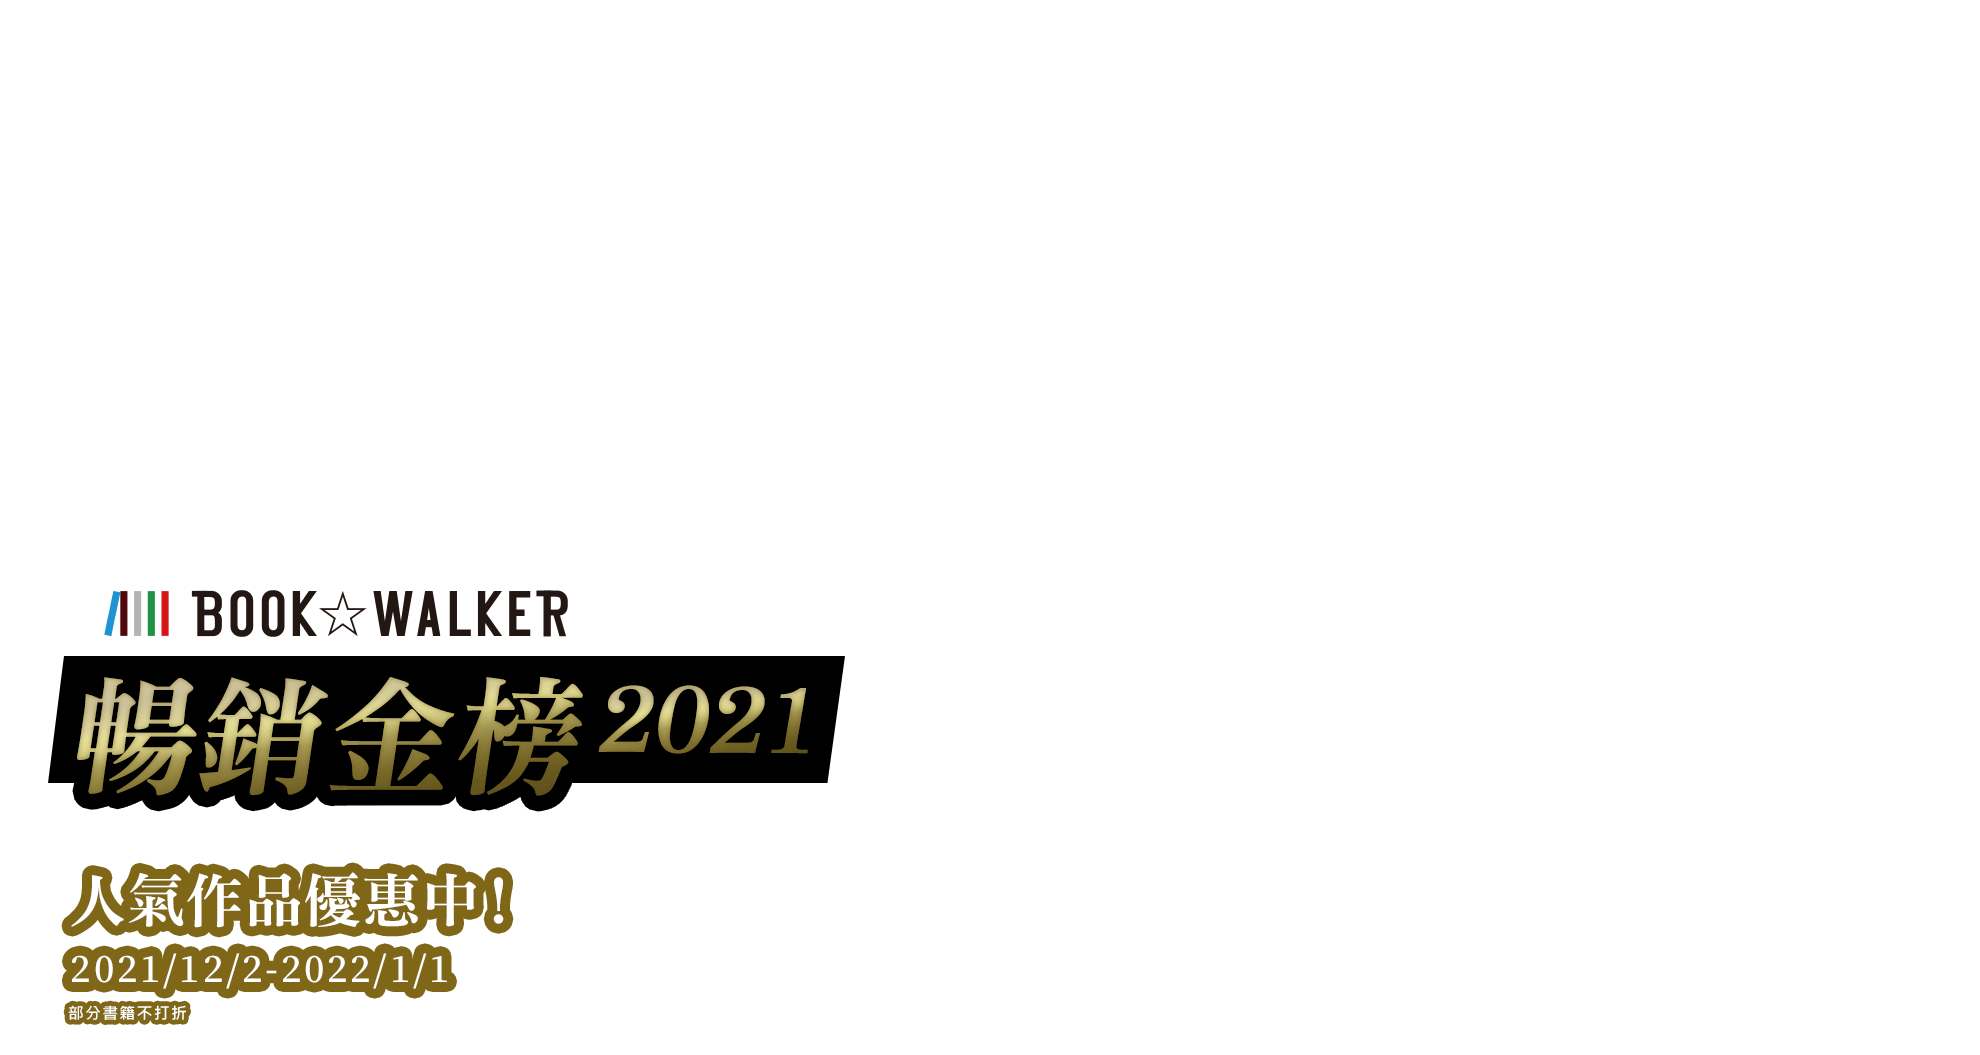 BOOK☆WALKER 2021暢銷金榜，人氣作品優惠中！2021/12/2-20221/1/1